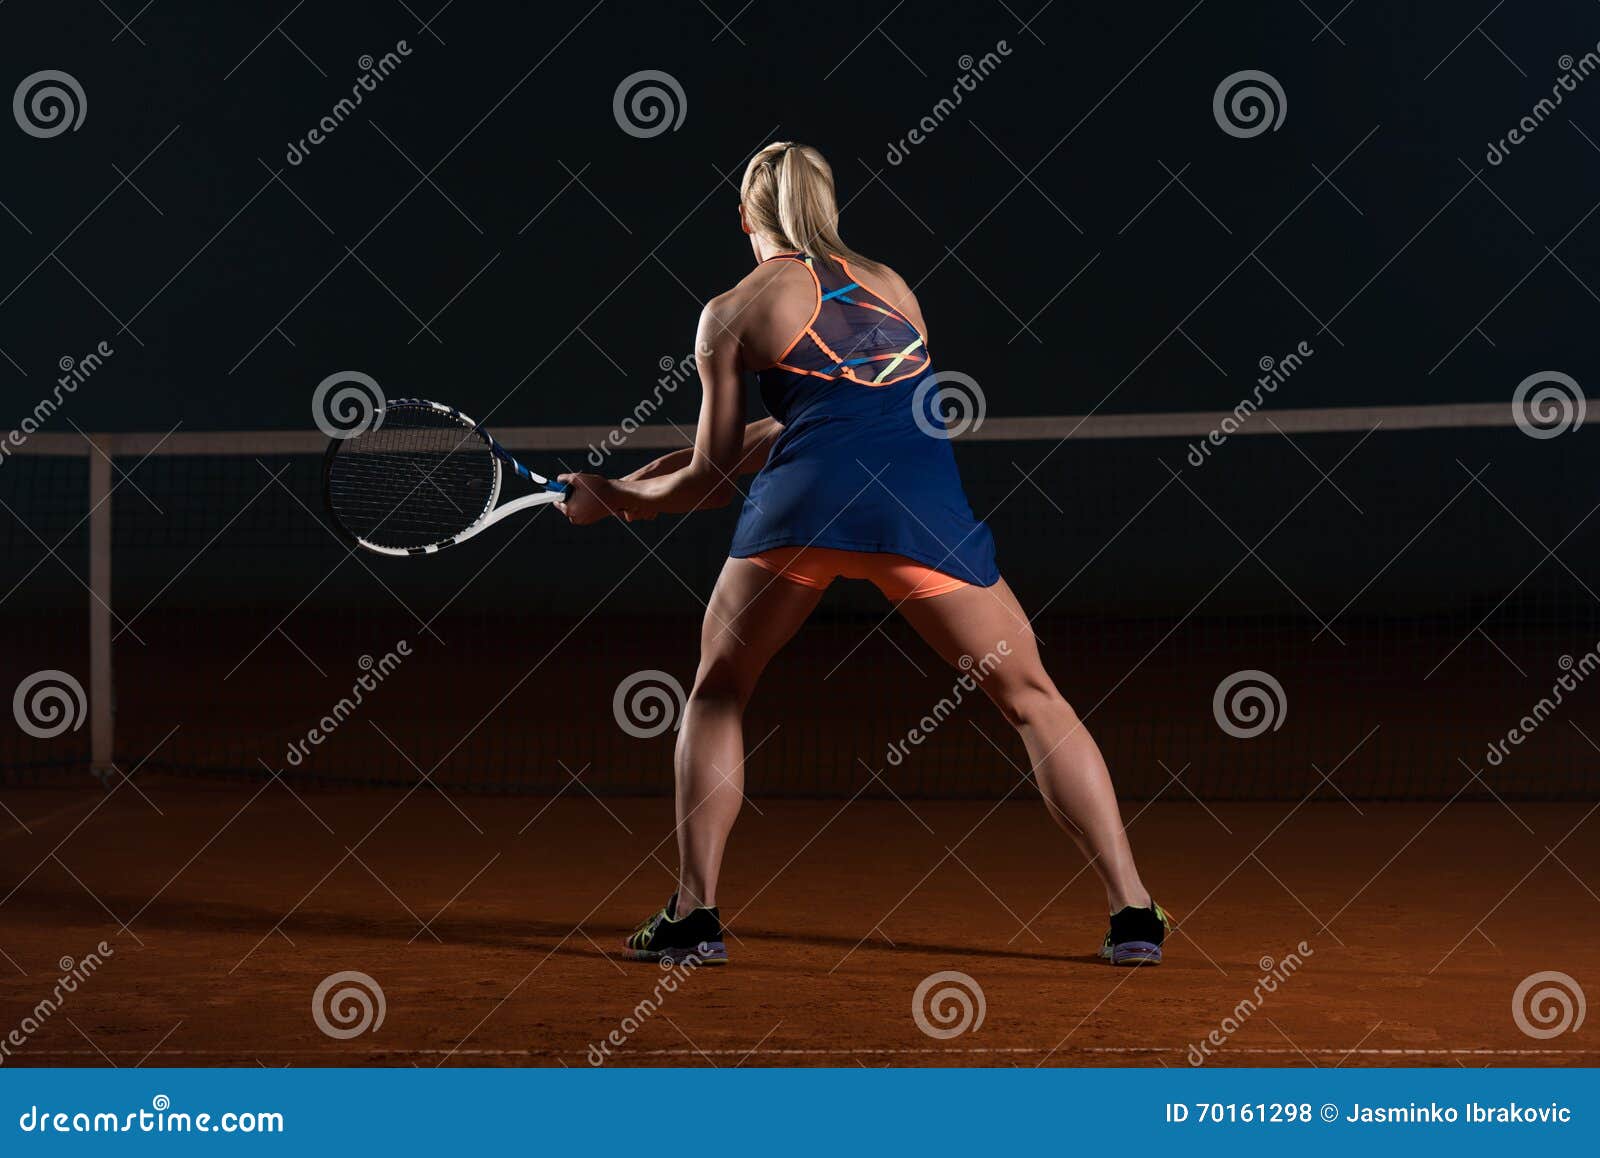 tennis player hitting the ball on tennis court